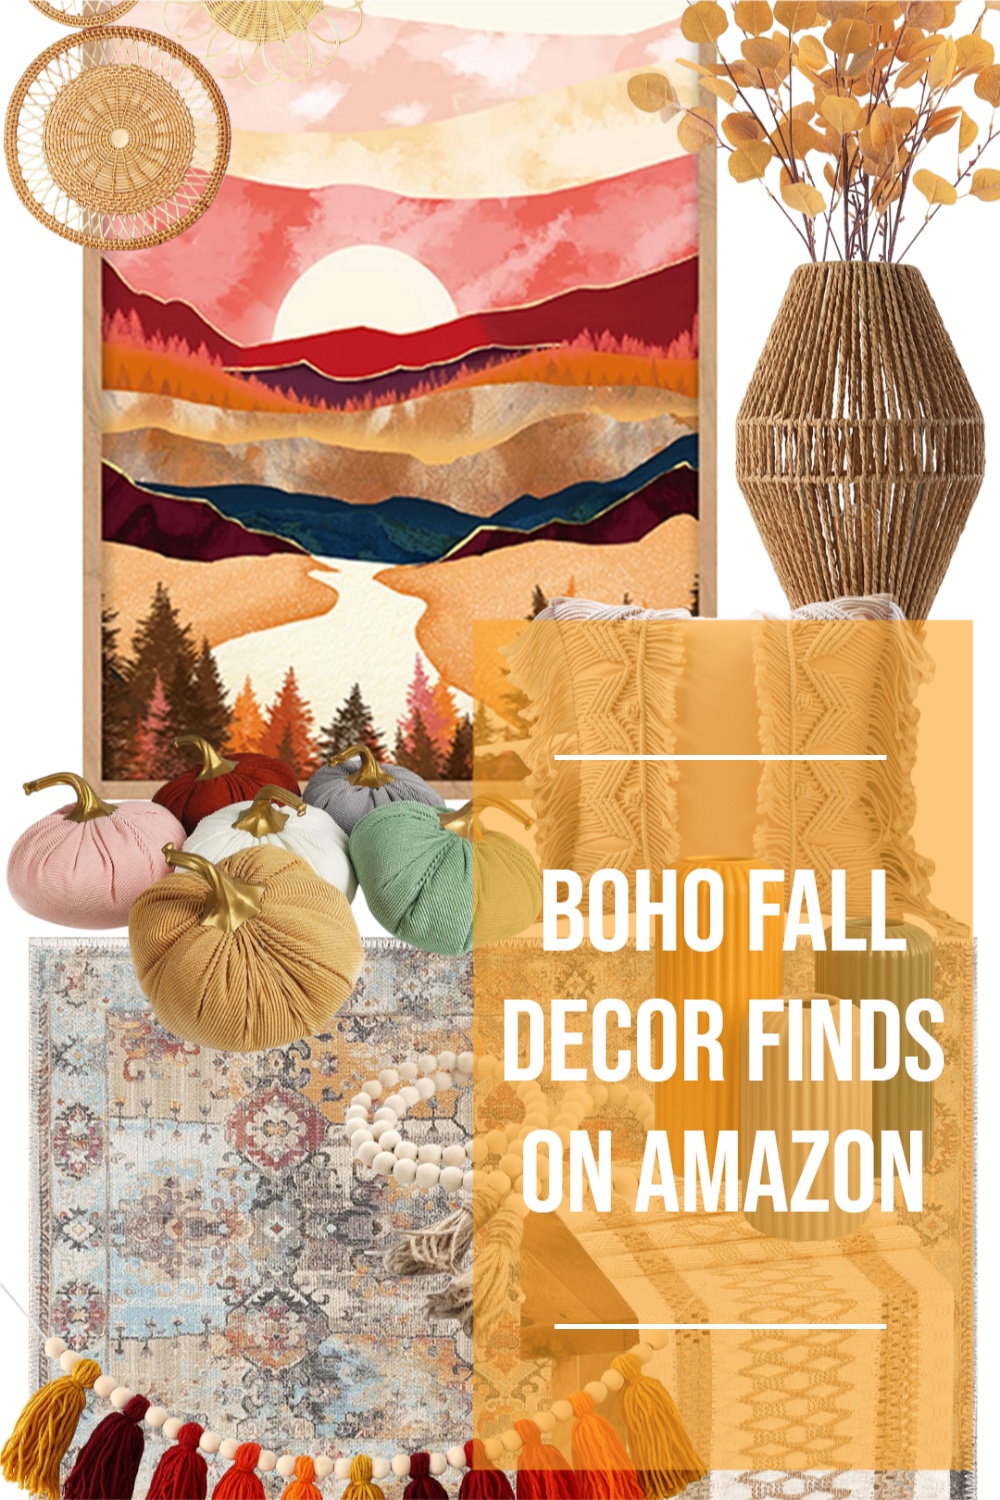 Boho fall home inspiration with canvas art, wicker, garland, rug, baskets